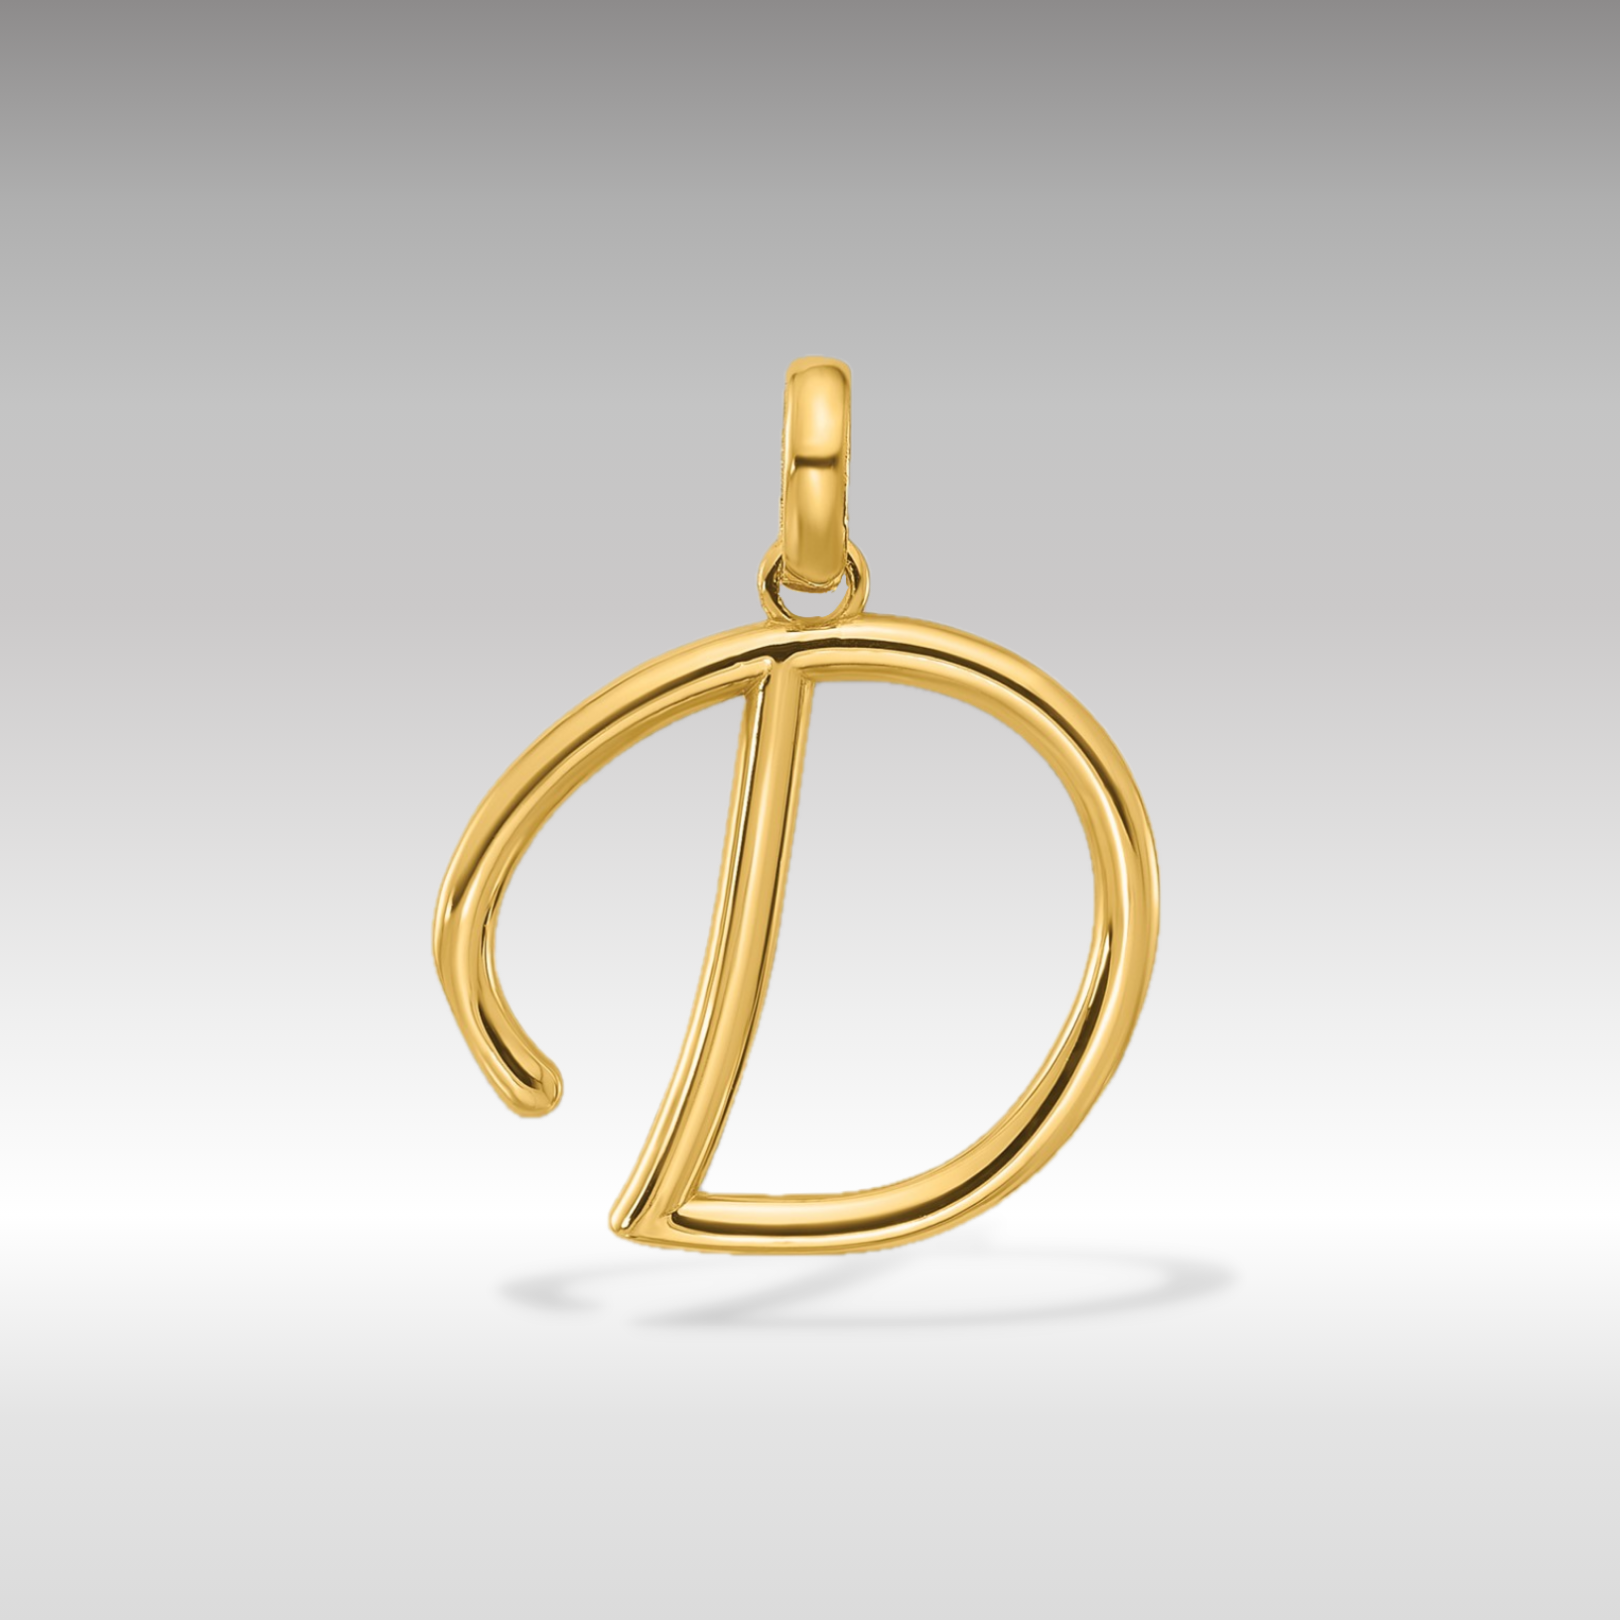 14K Gold Fancy Letter 'D' Charm Pendant - Charlie & Co. Jewelry